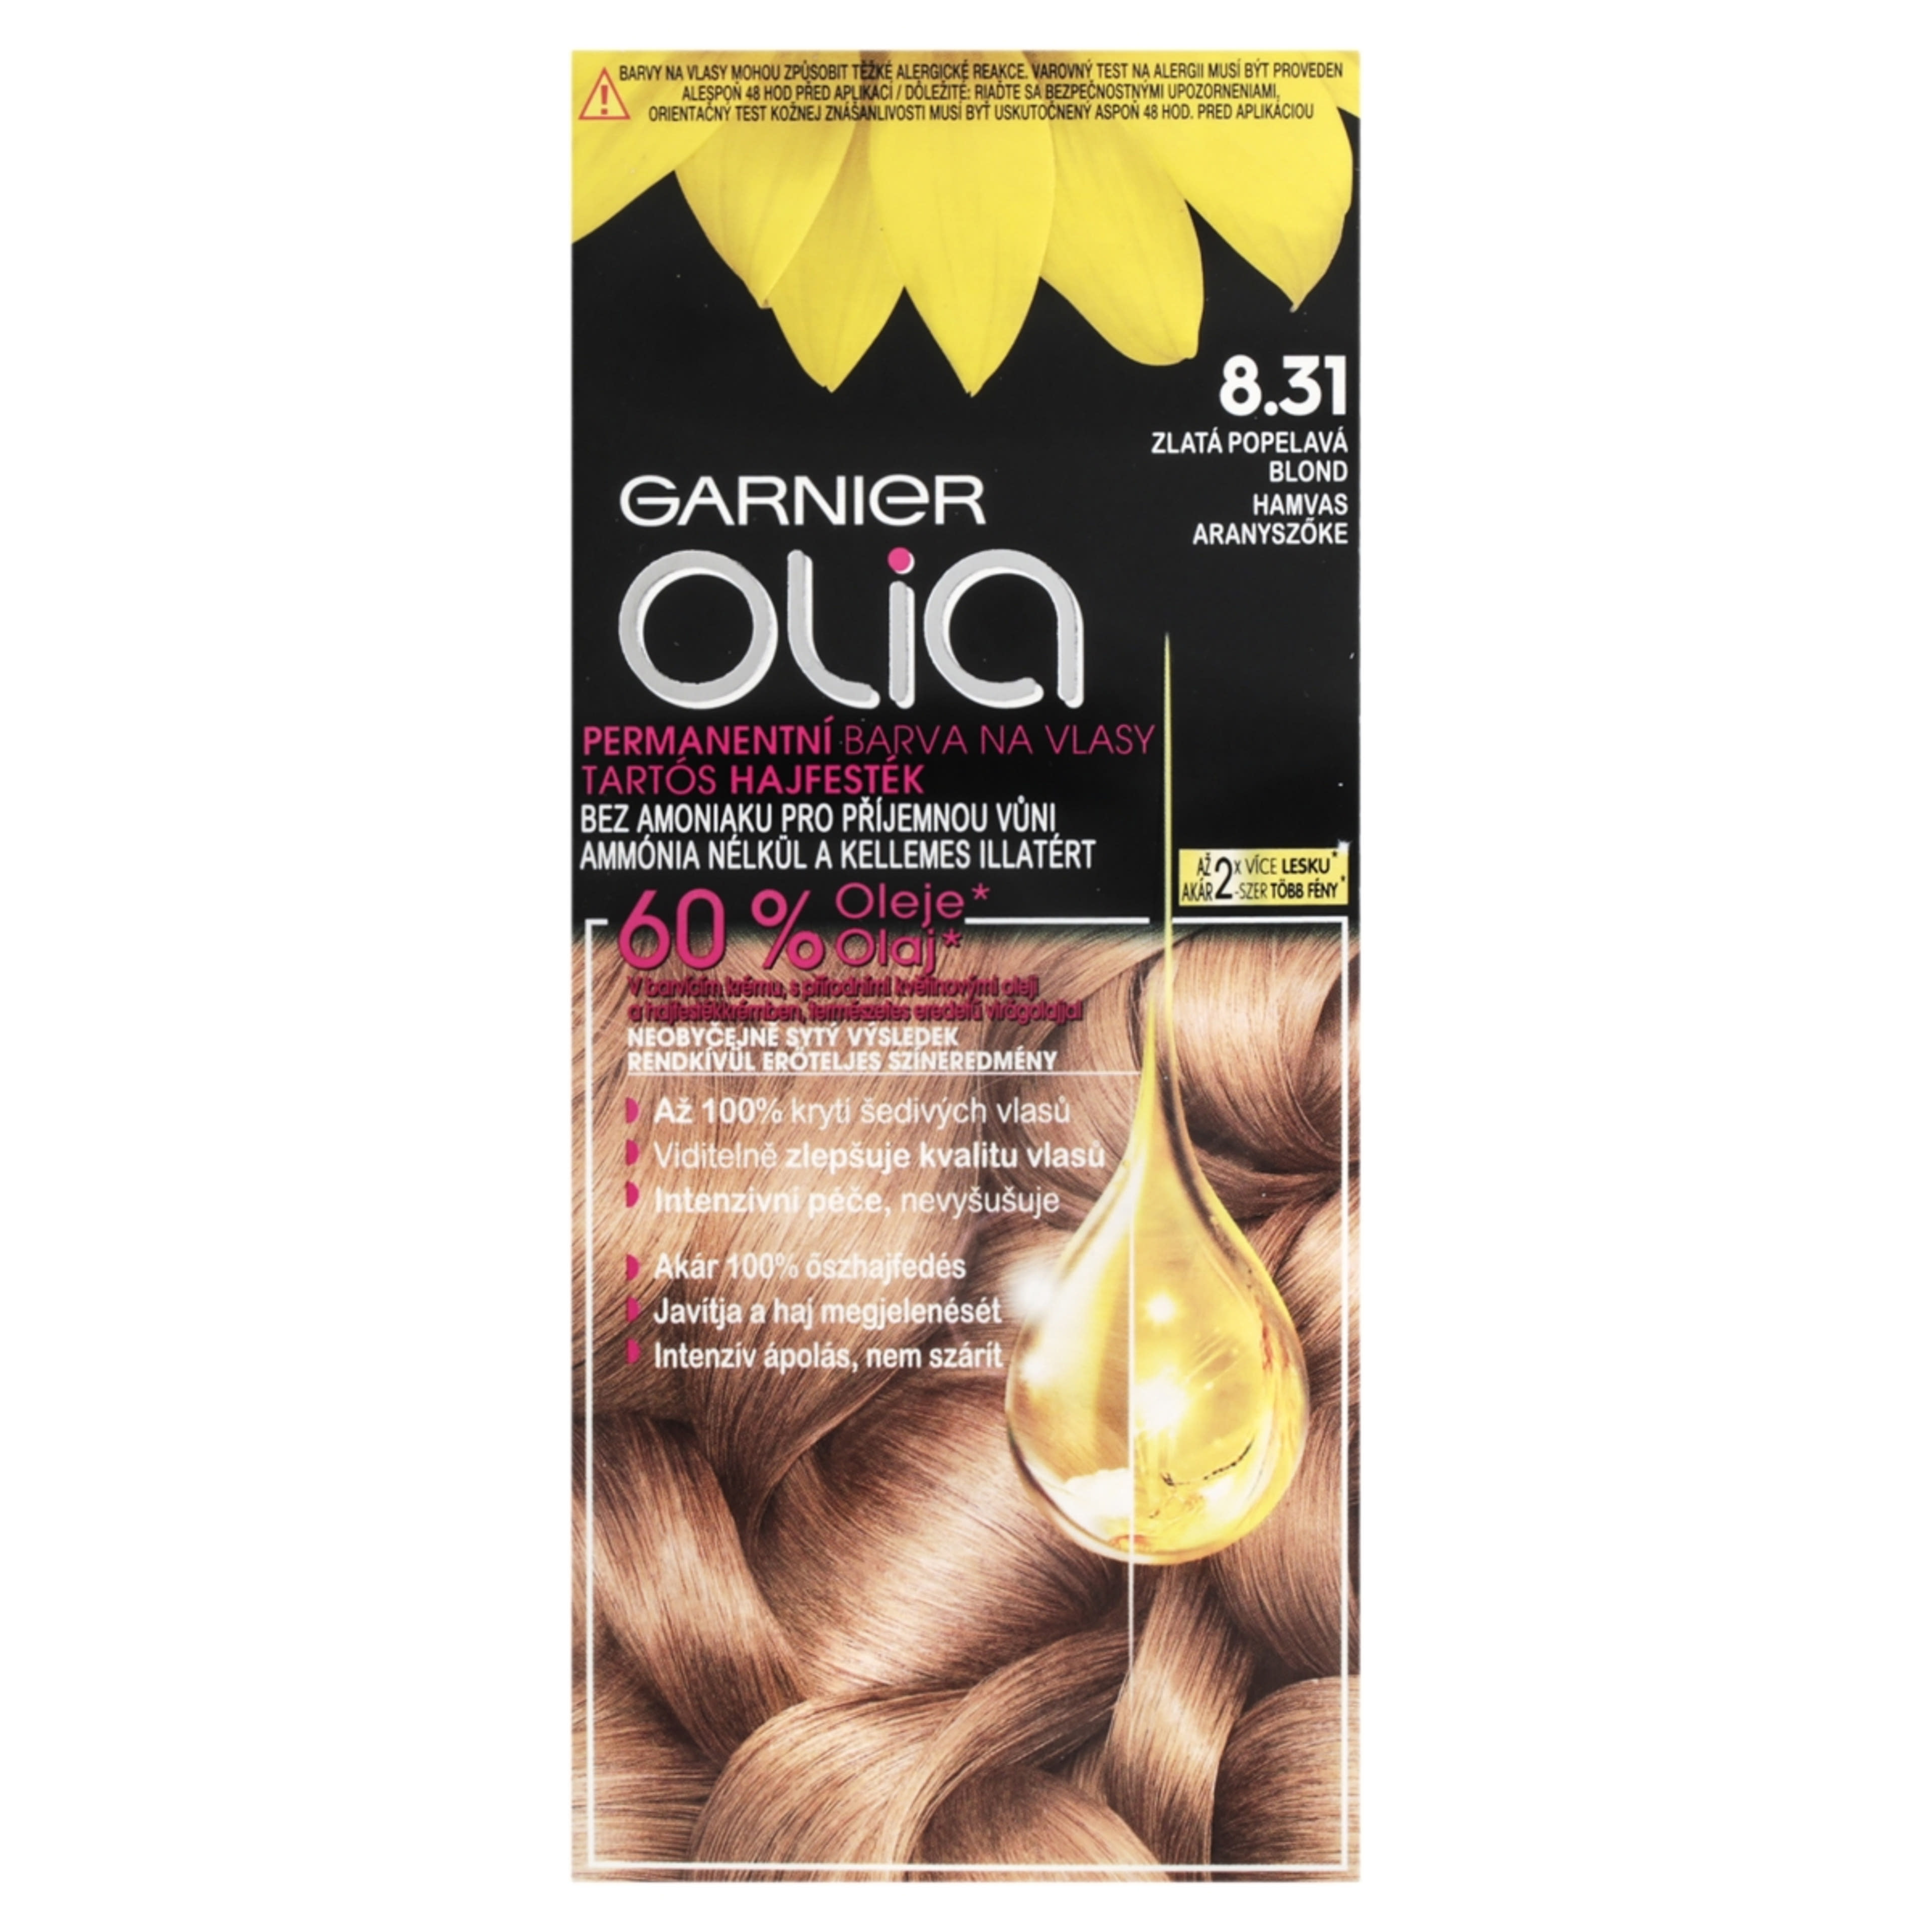 Garnier Olia tartós hajfesték 8.31 Hamvas aranyszőke - 1 db-3